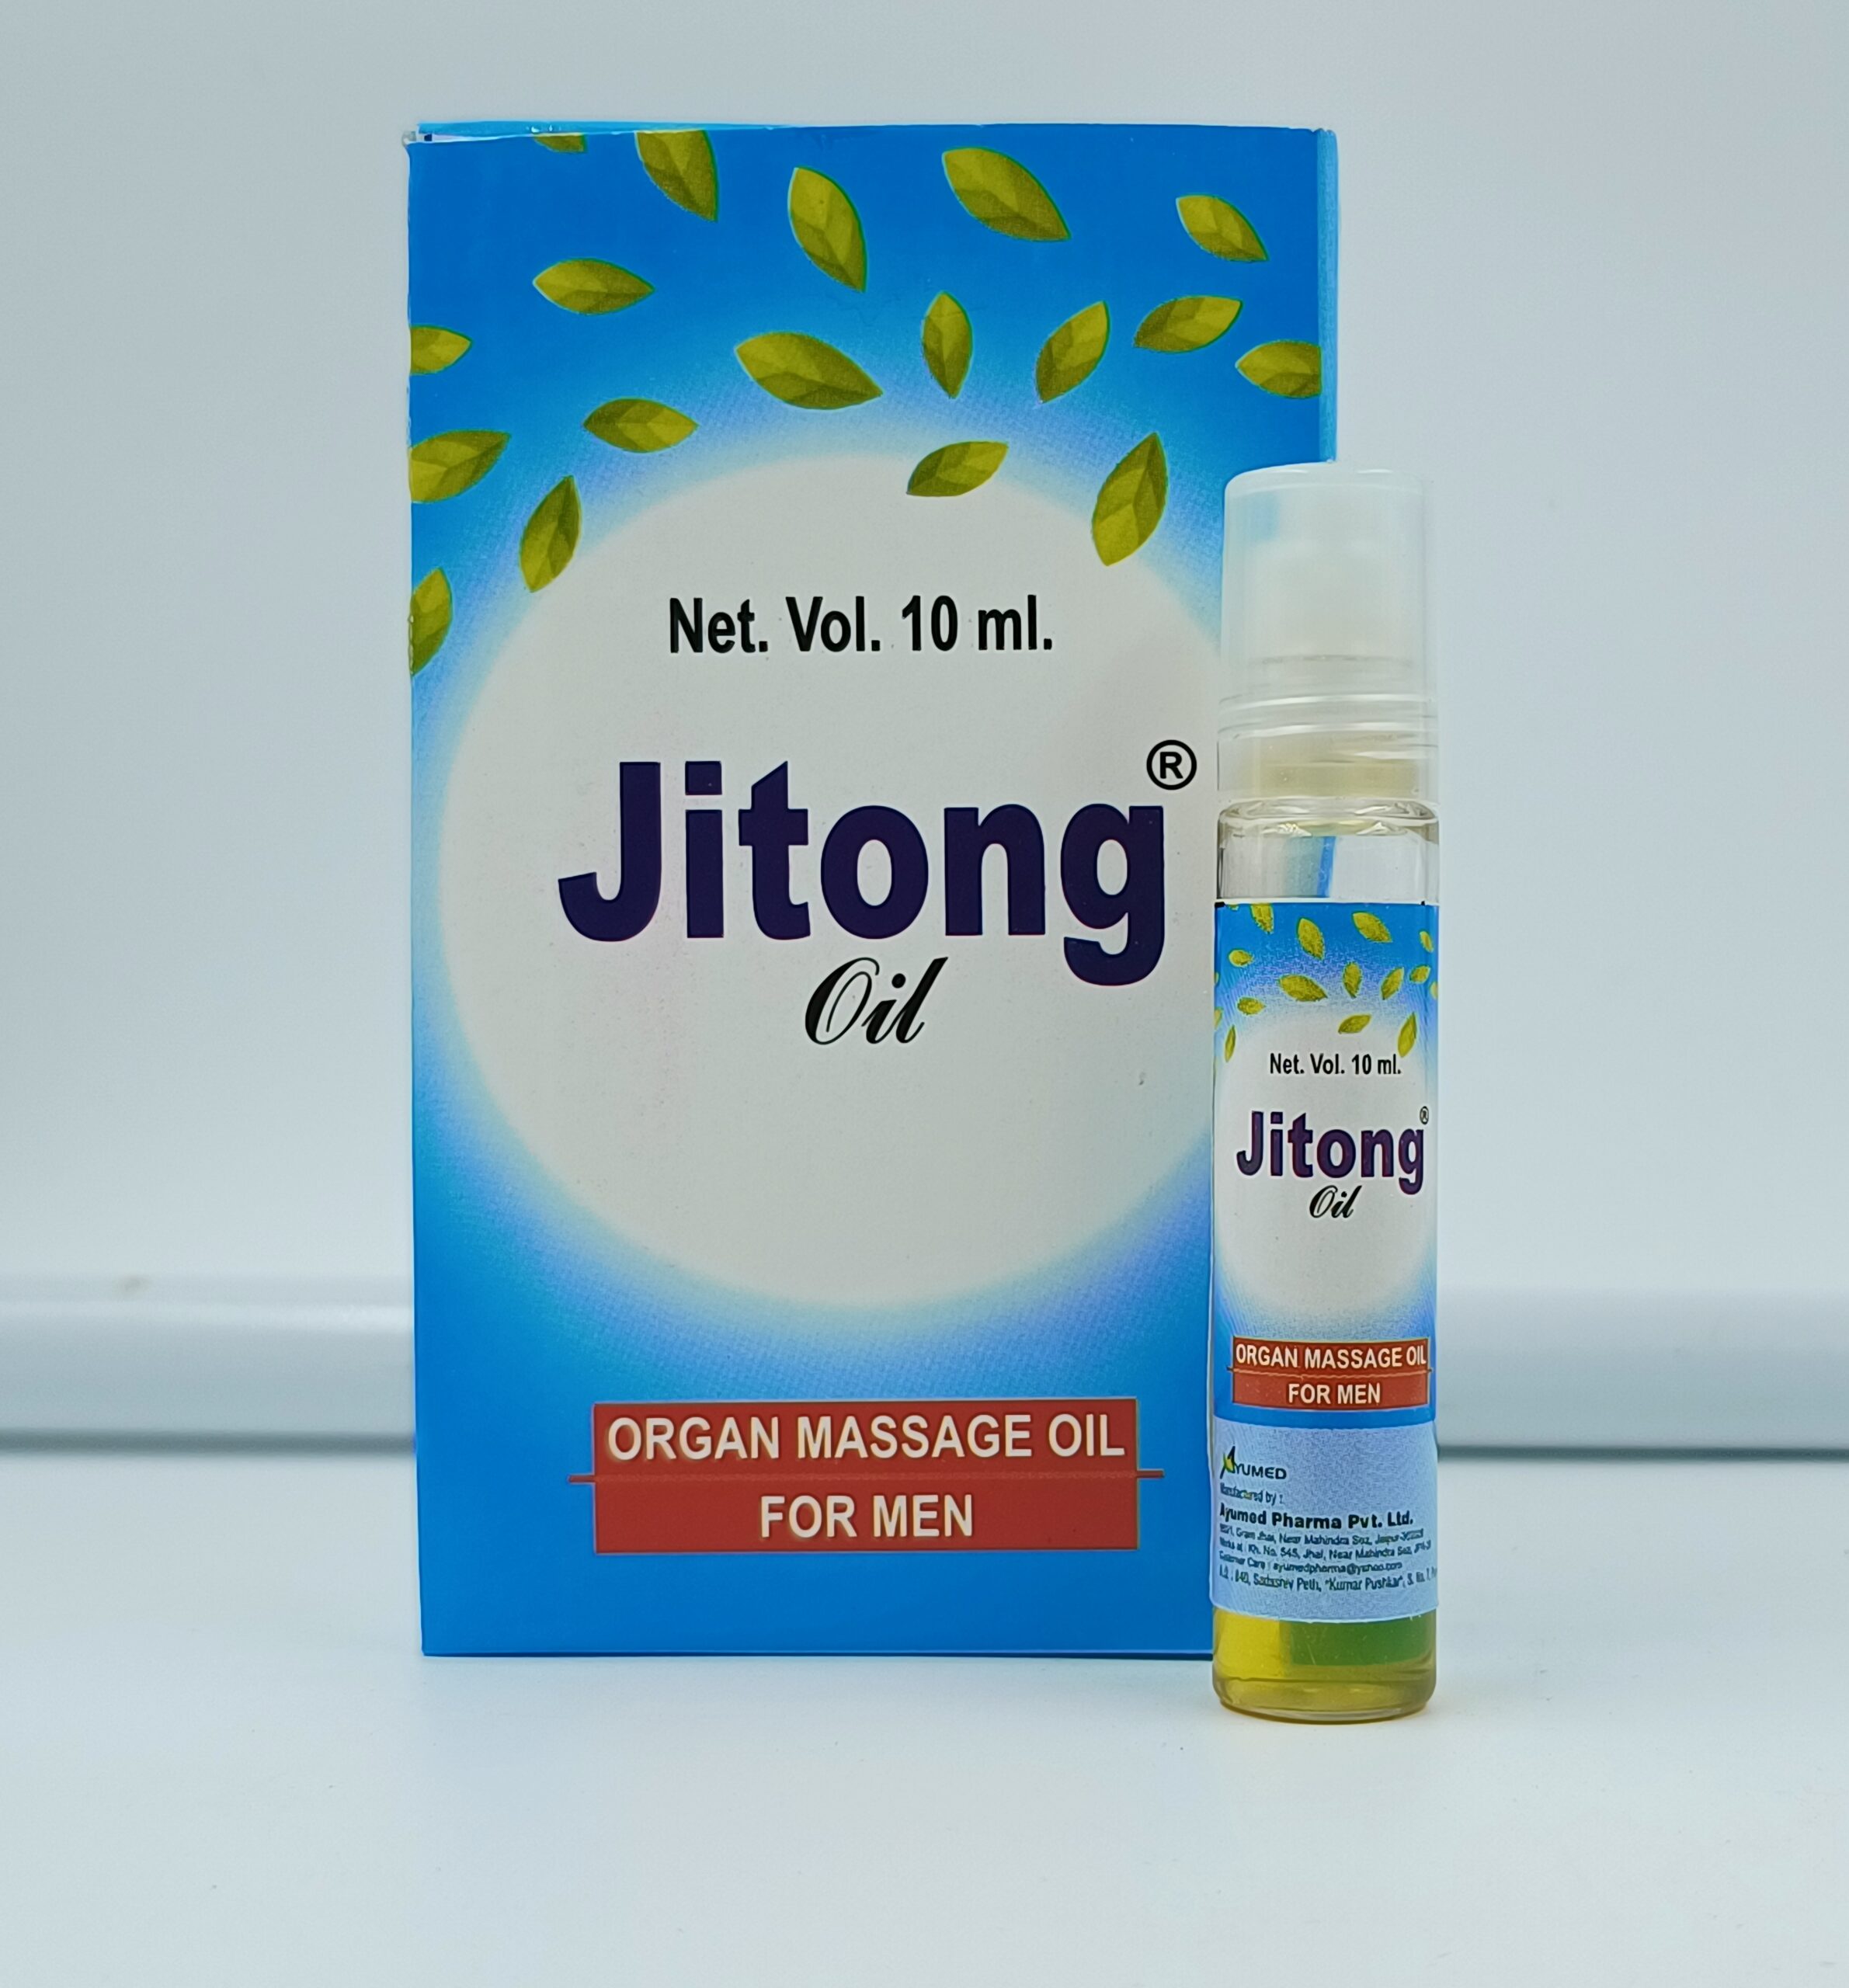 Jitong Oil ORGAN MASSAGE OIL FOR MEN